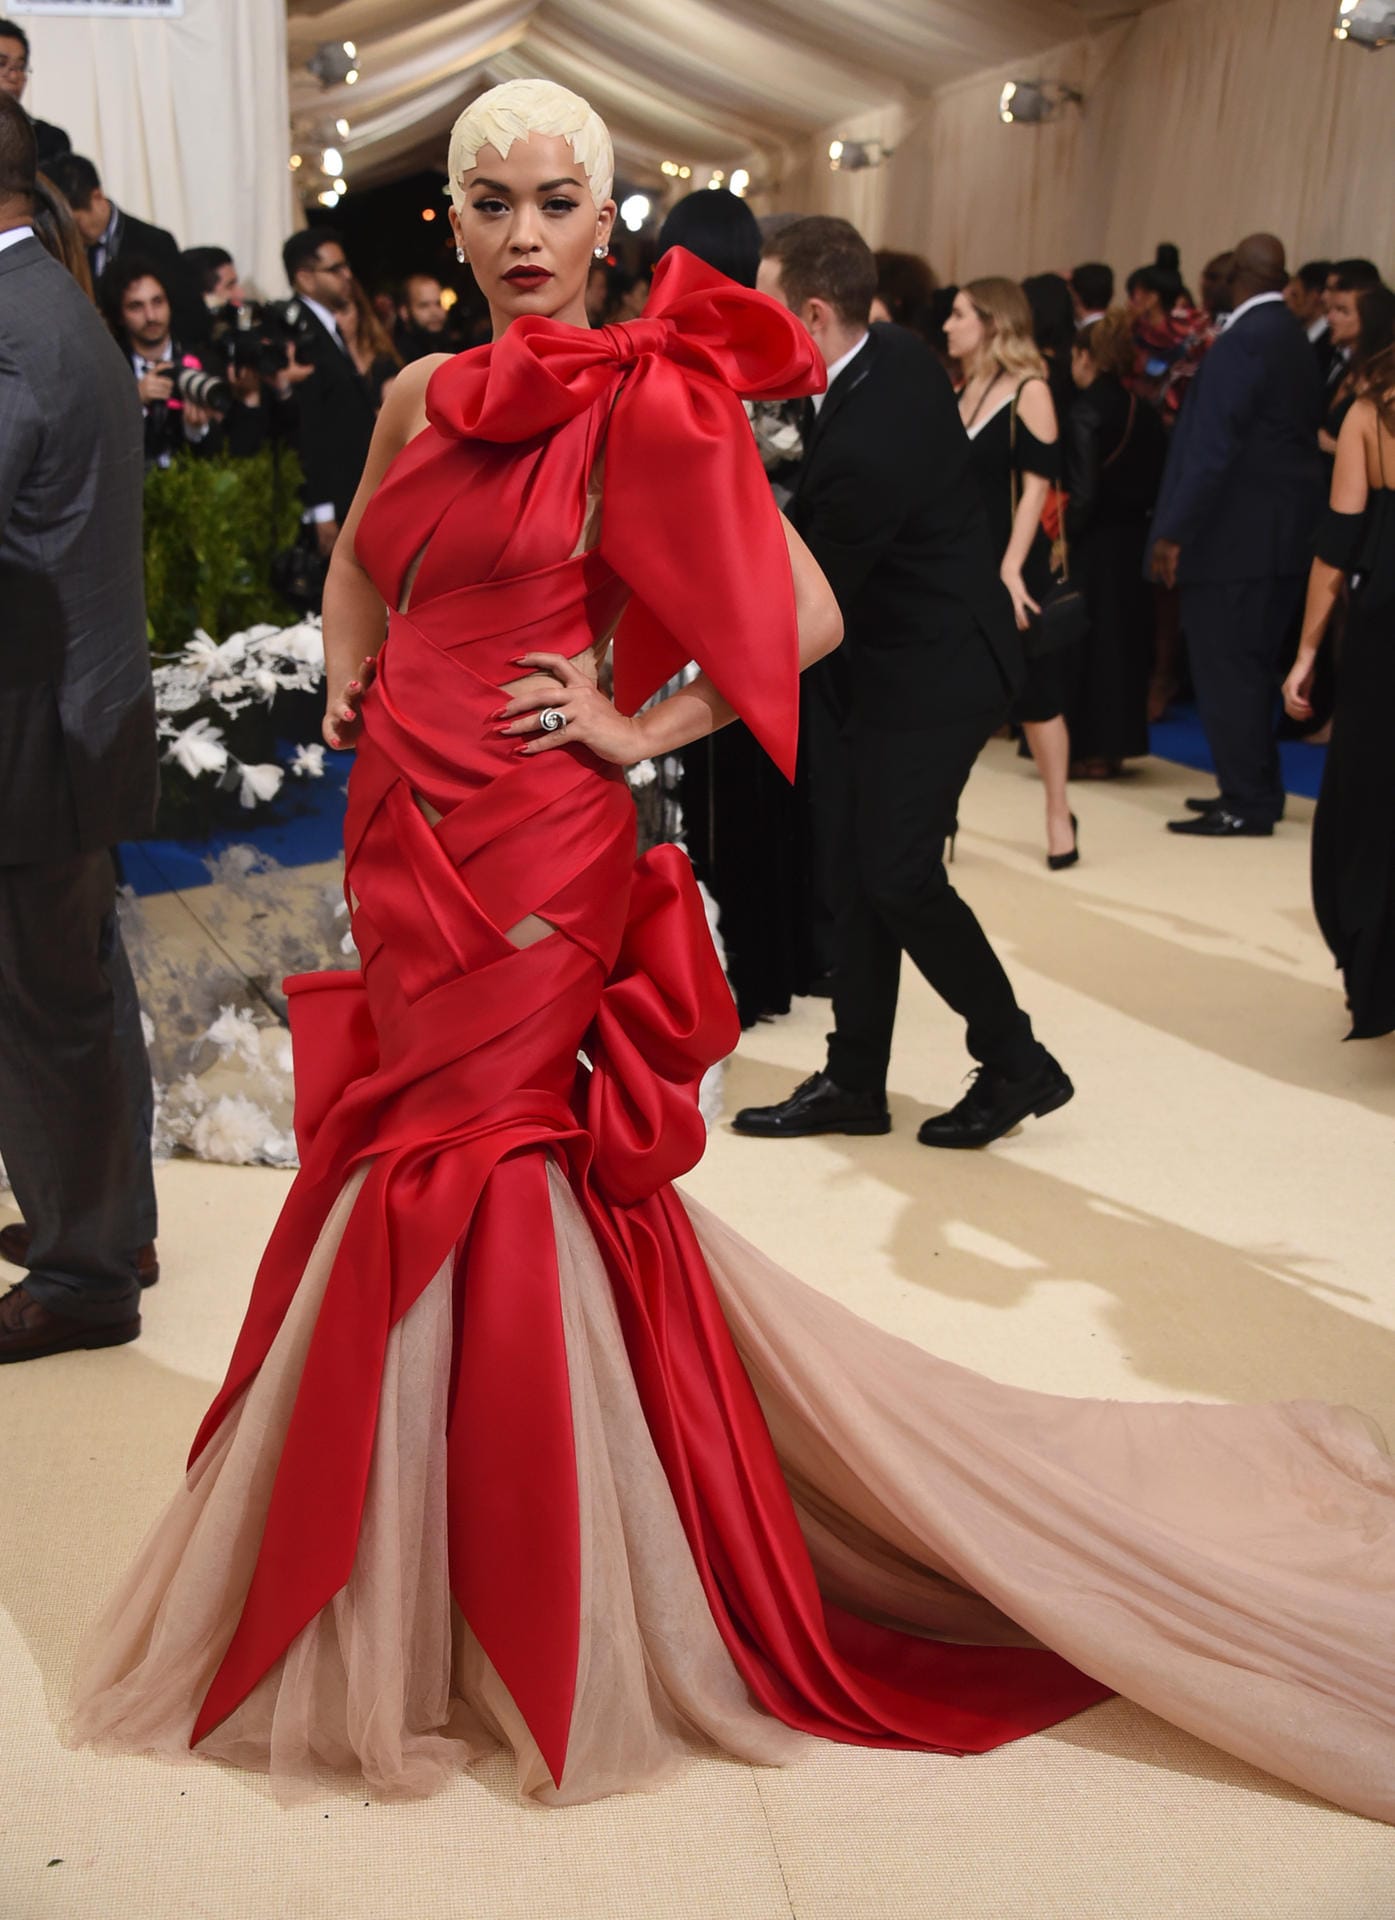 The Lady in Red: Rita Ora.